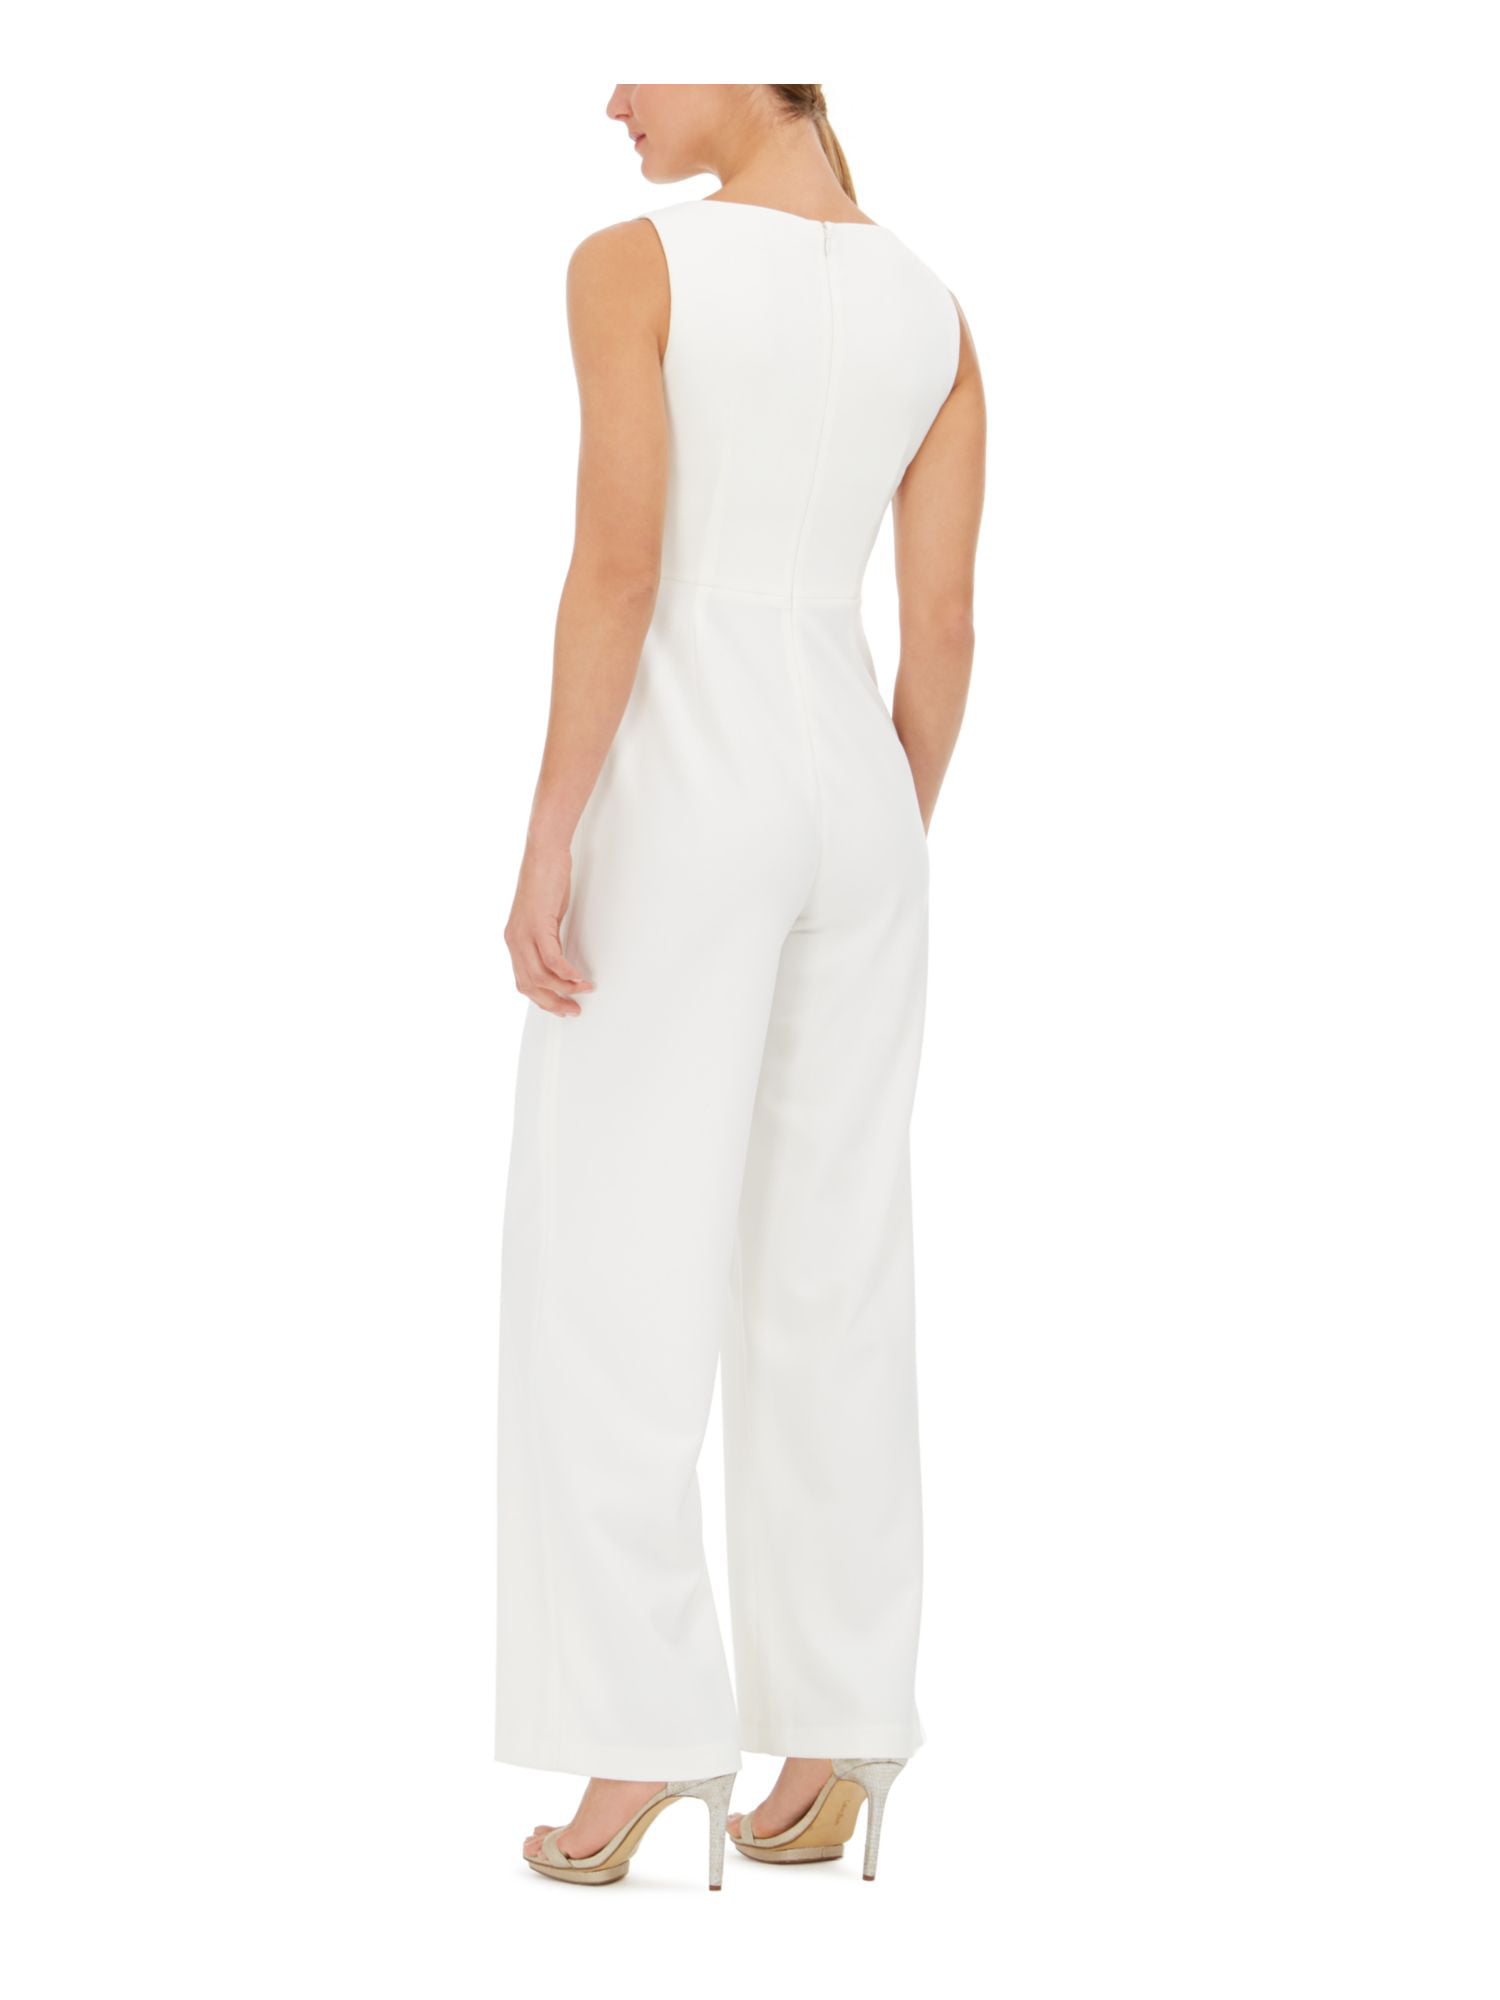 CALVIN KLEIN Womens White Sleeveless Jewel Neck Jumpsuit Size: 4 -  